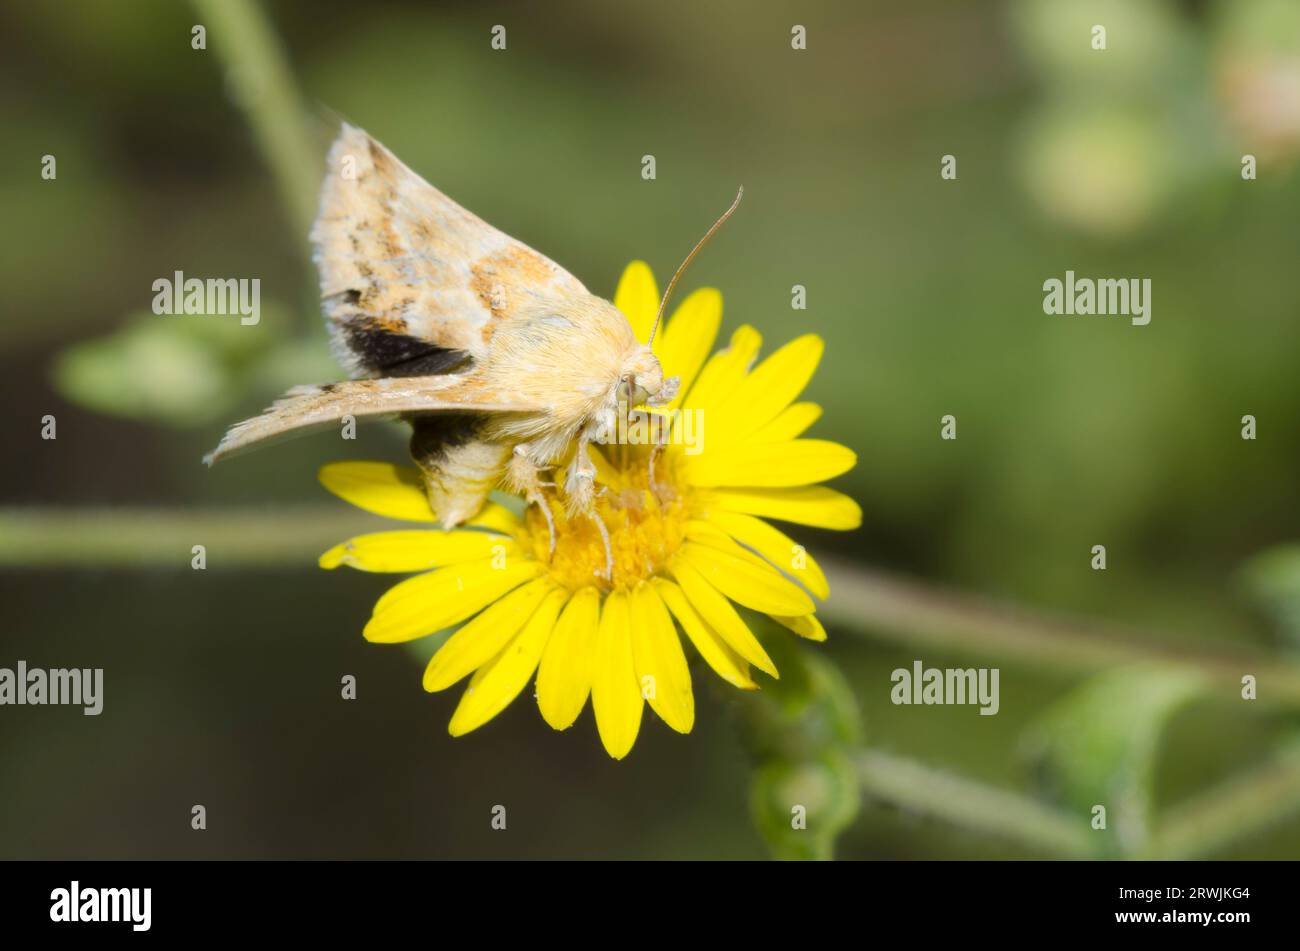 Alluring Schinia Moth, Schinia siren, foraging on Camphorweed, Heterotheca subaxillaris Stock Photo